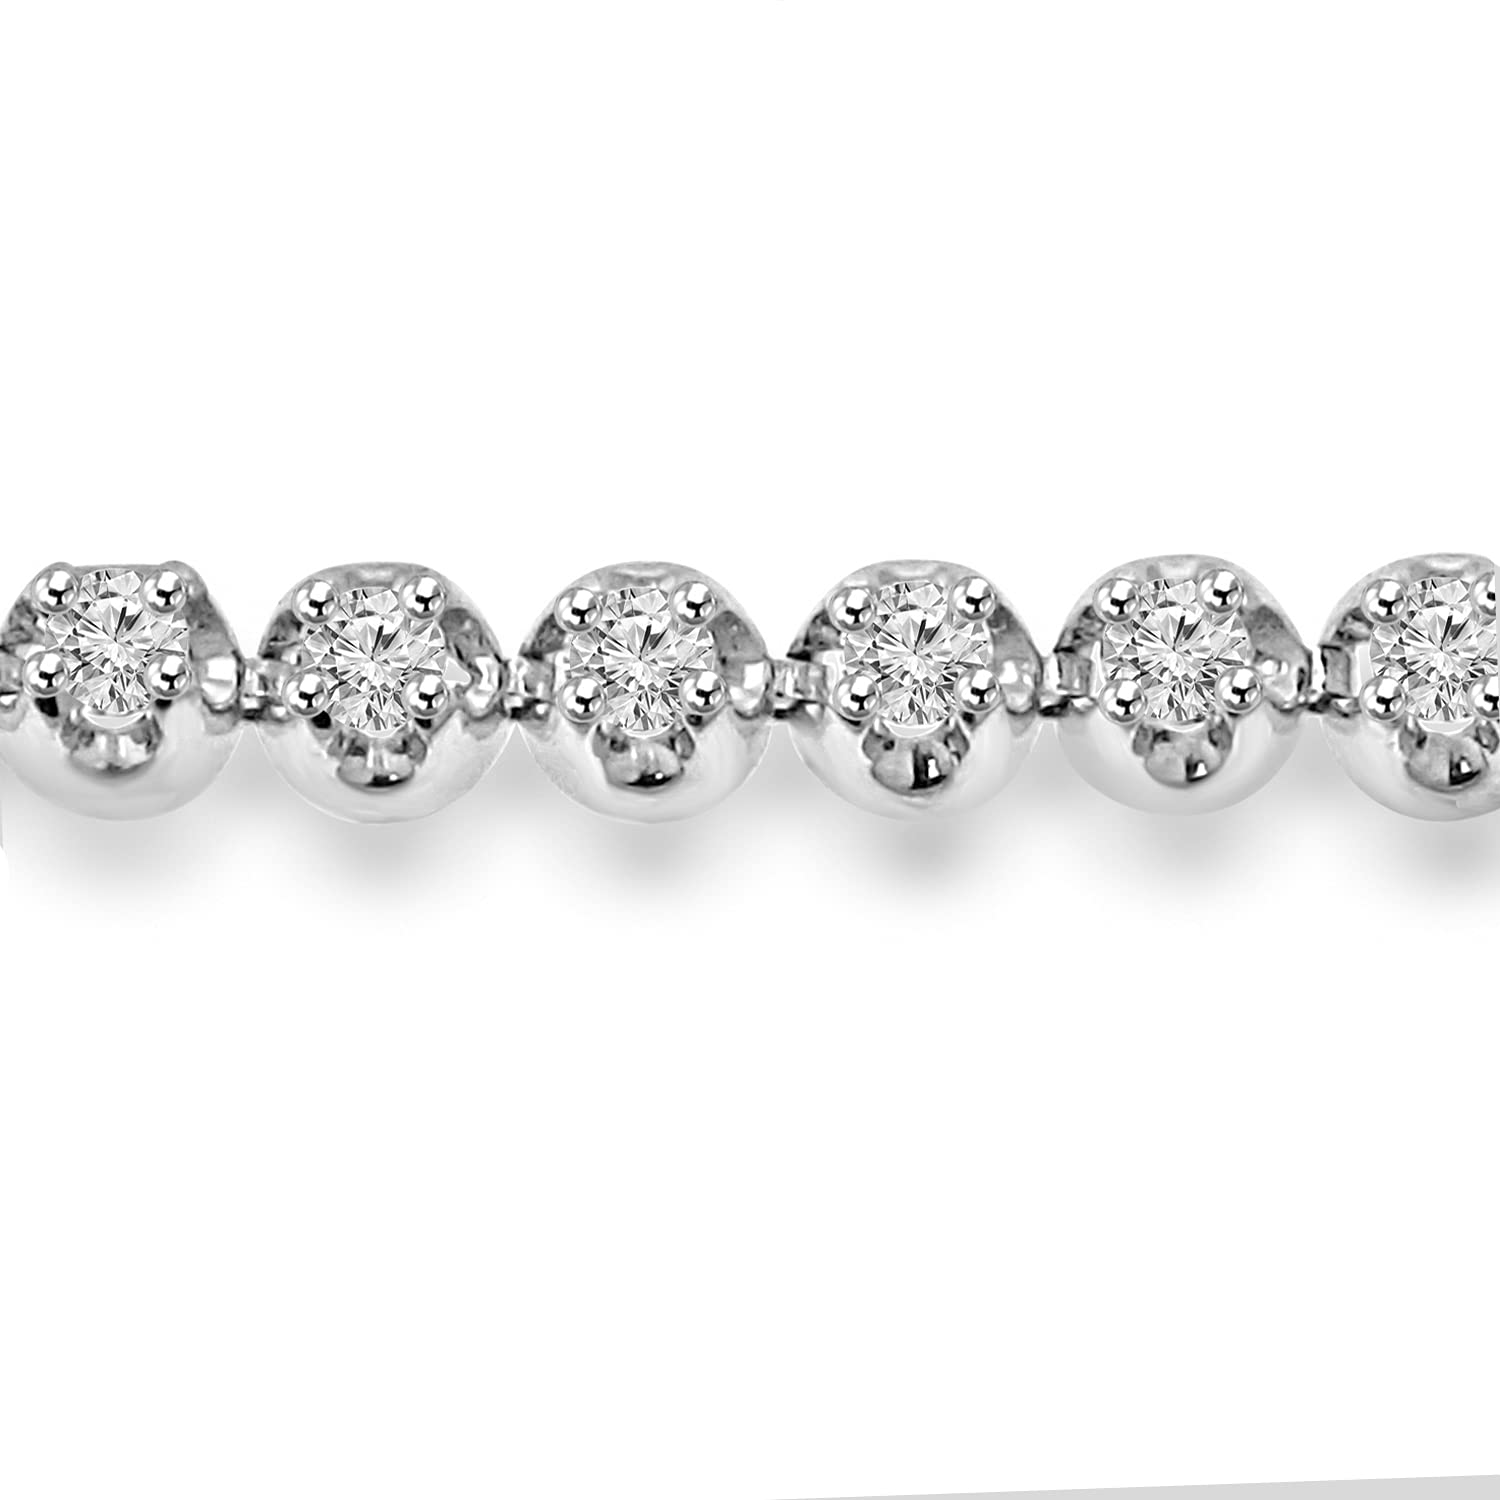 Madina Jewelry 4.00 ct Round Cut Diamond Tennis Bracelet in 14 kt White Gold